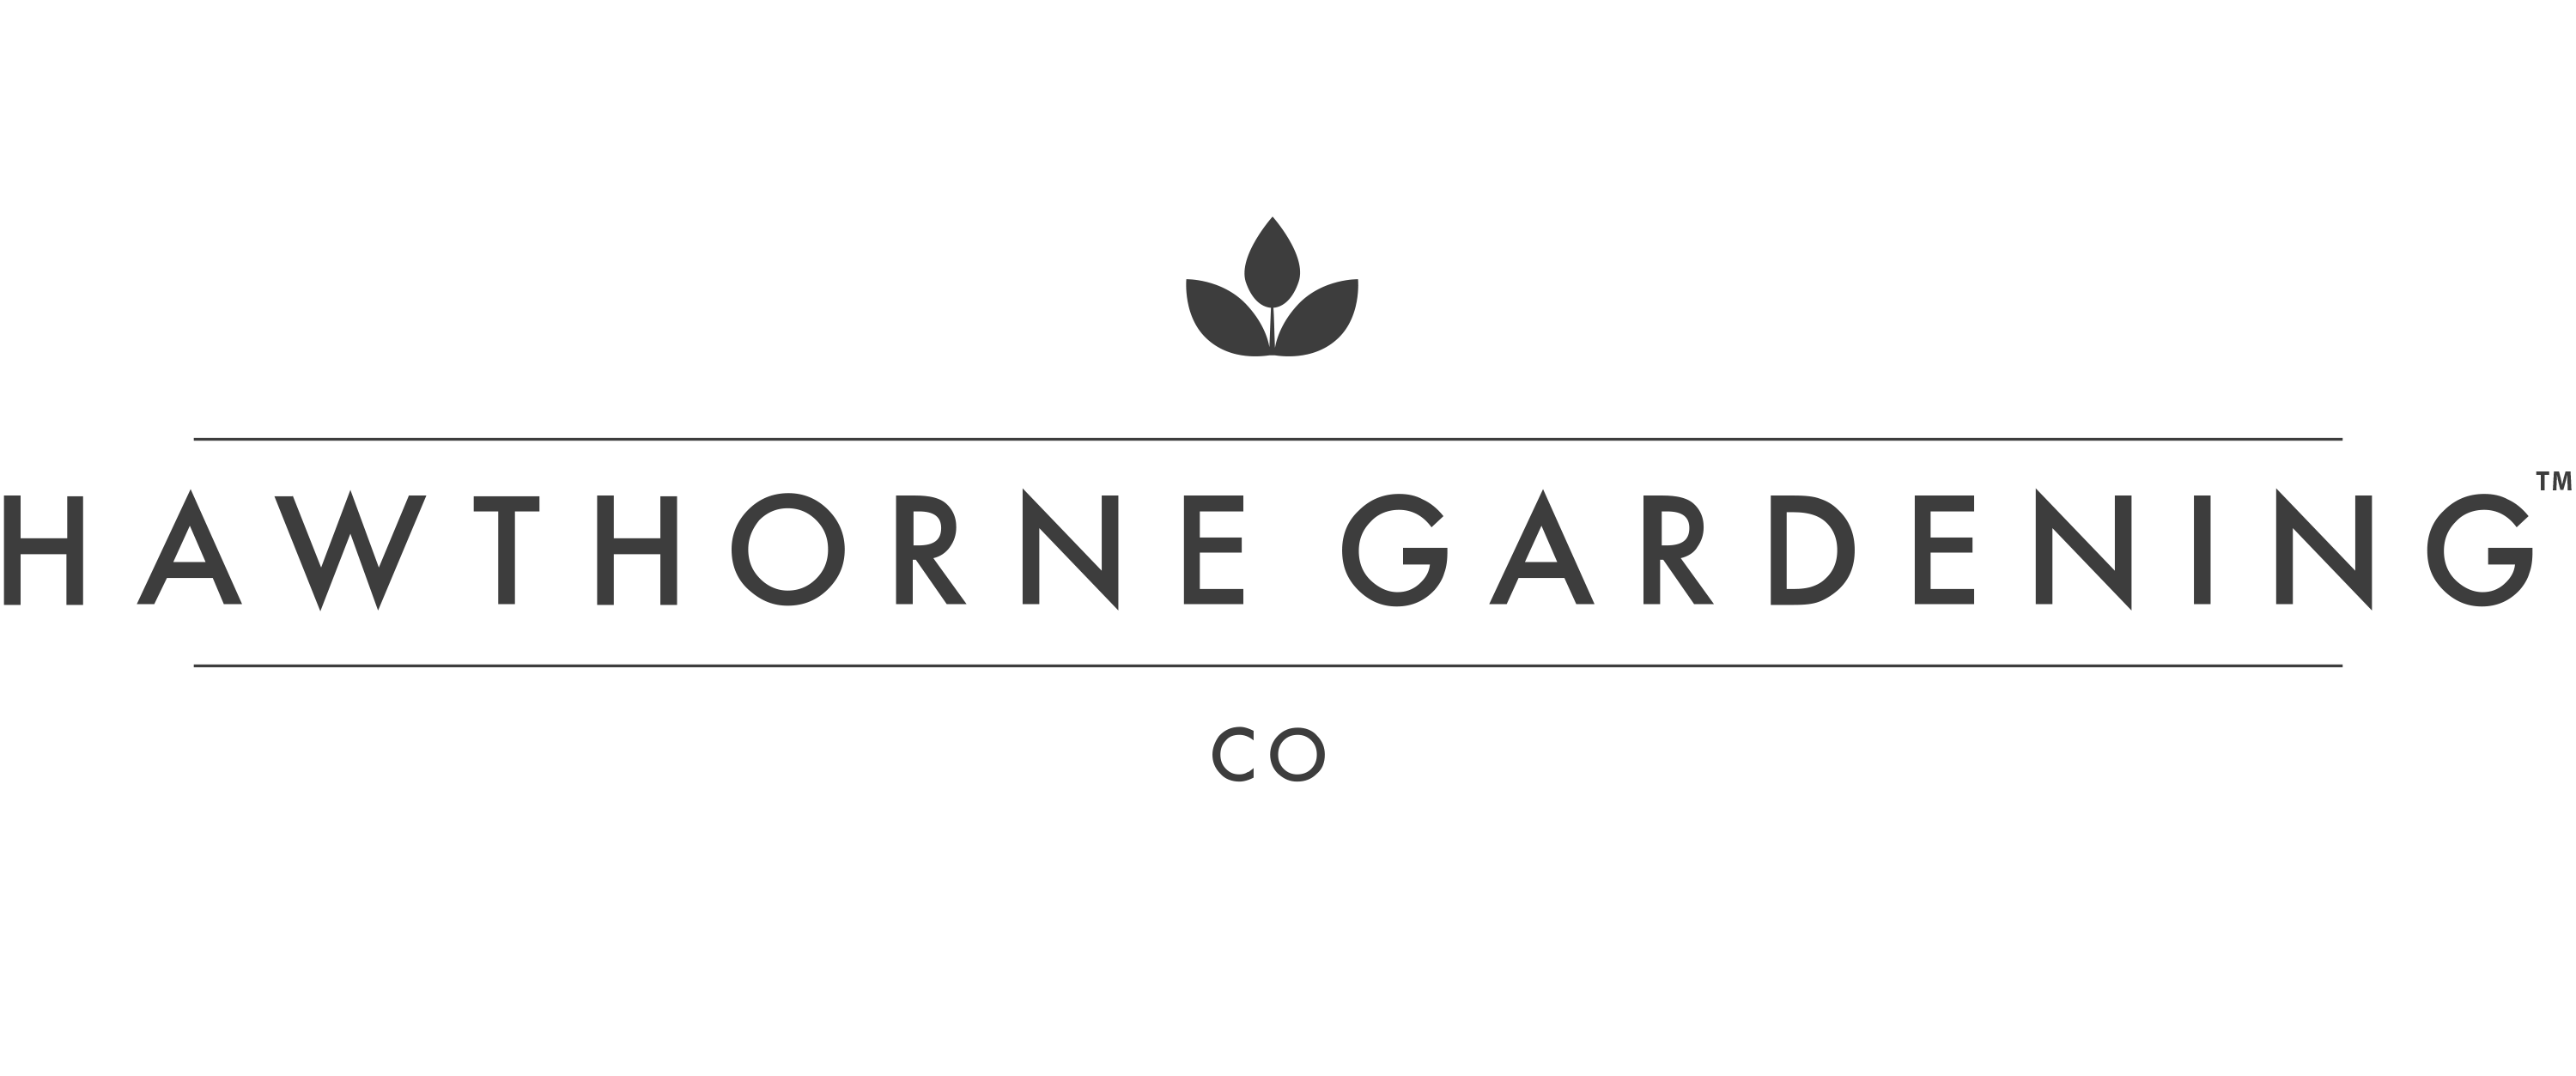 Hawthorne Gardening Company Logo